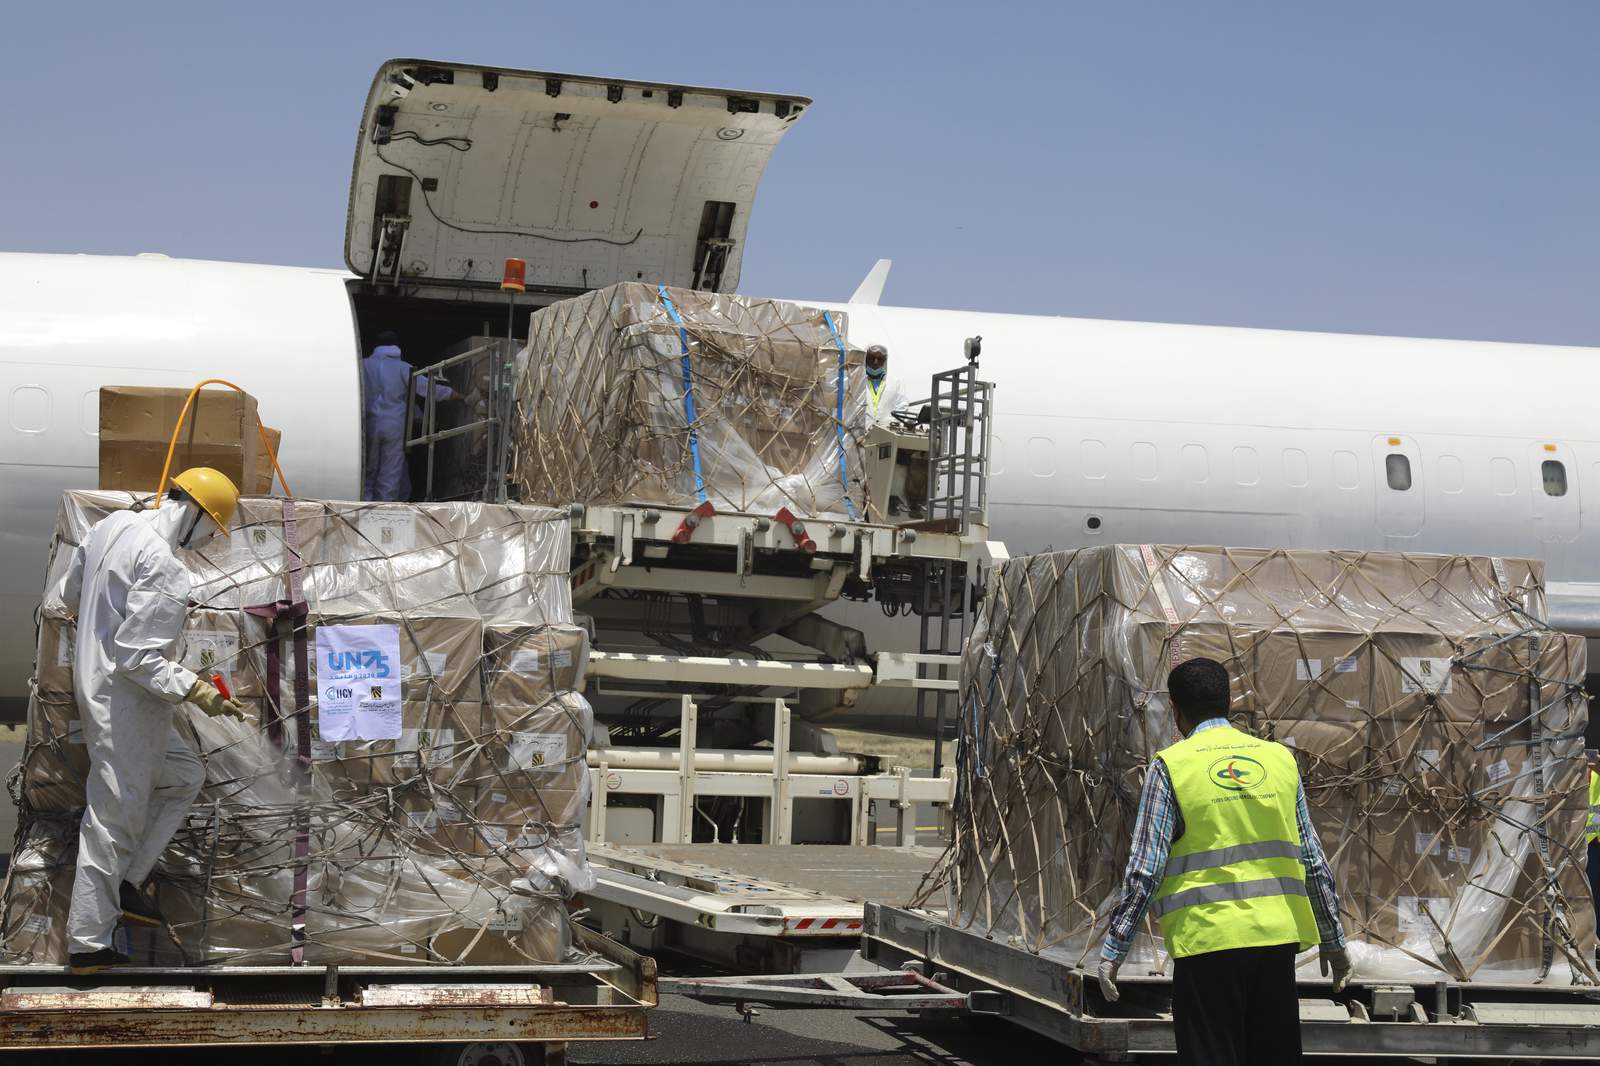 Last batch of joint aid lands in Yemen amid UN funding cuts